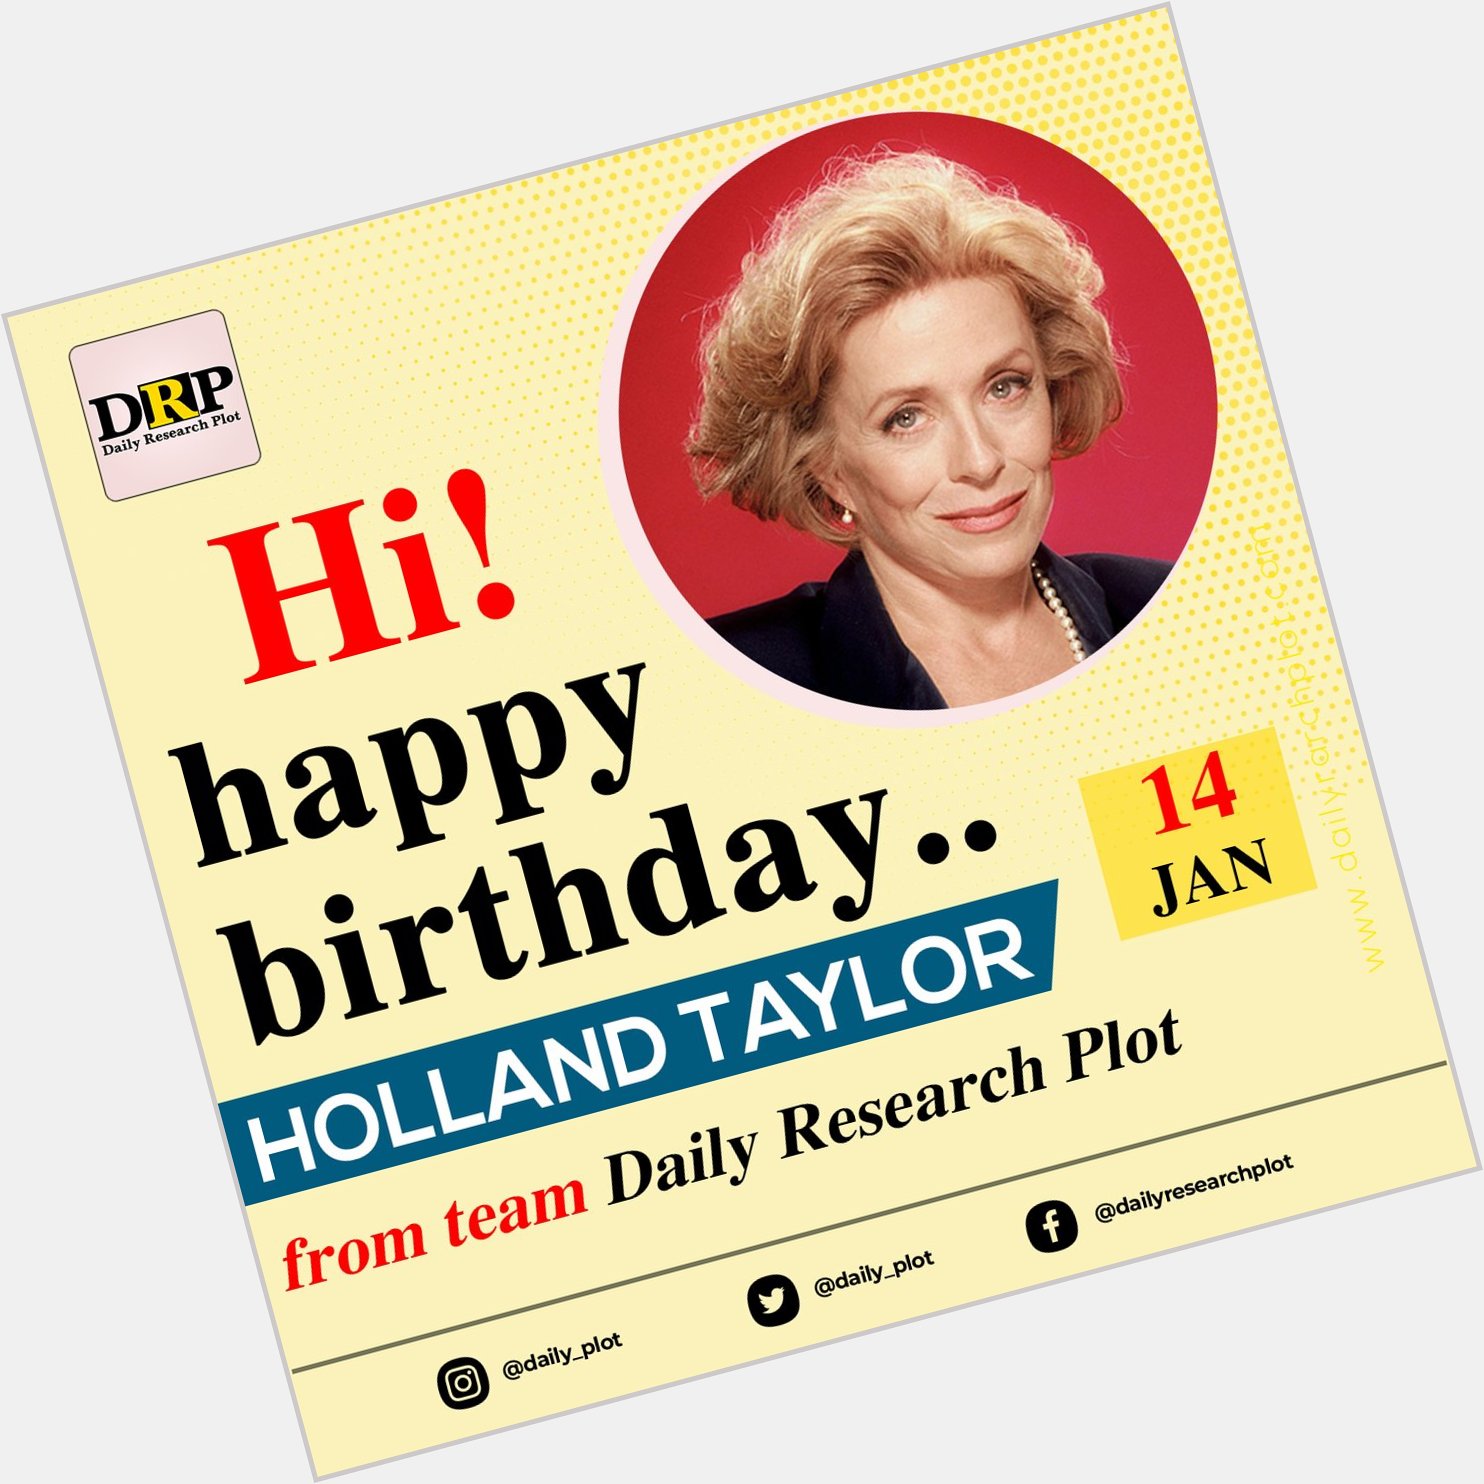 Happy Birthday Holland Taylor 